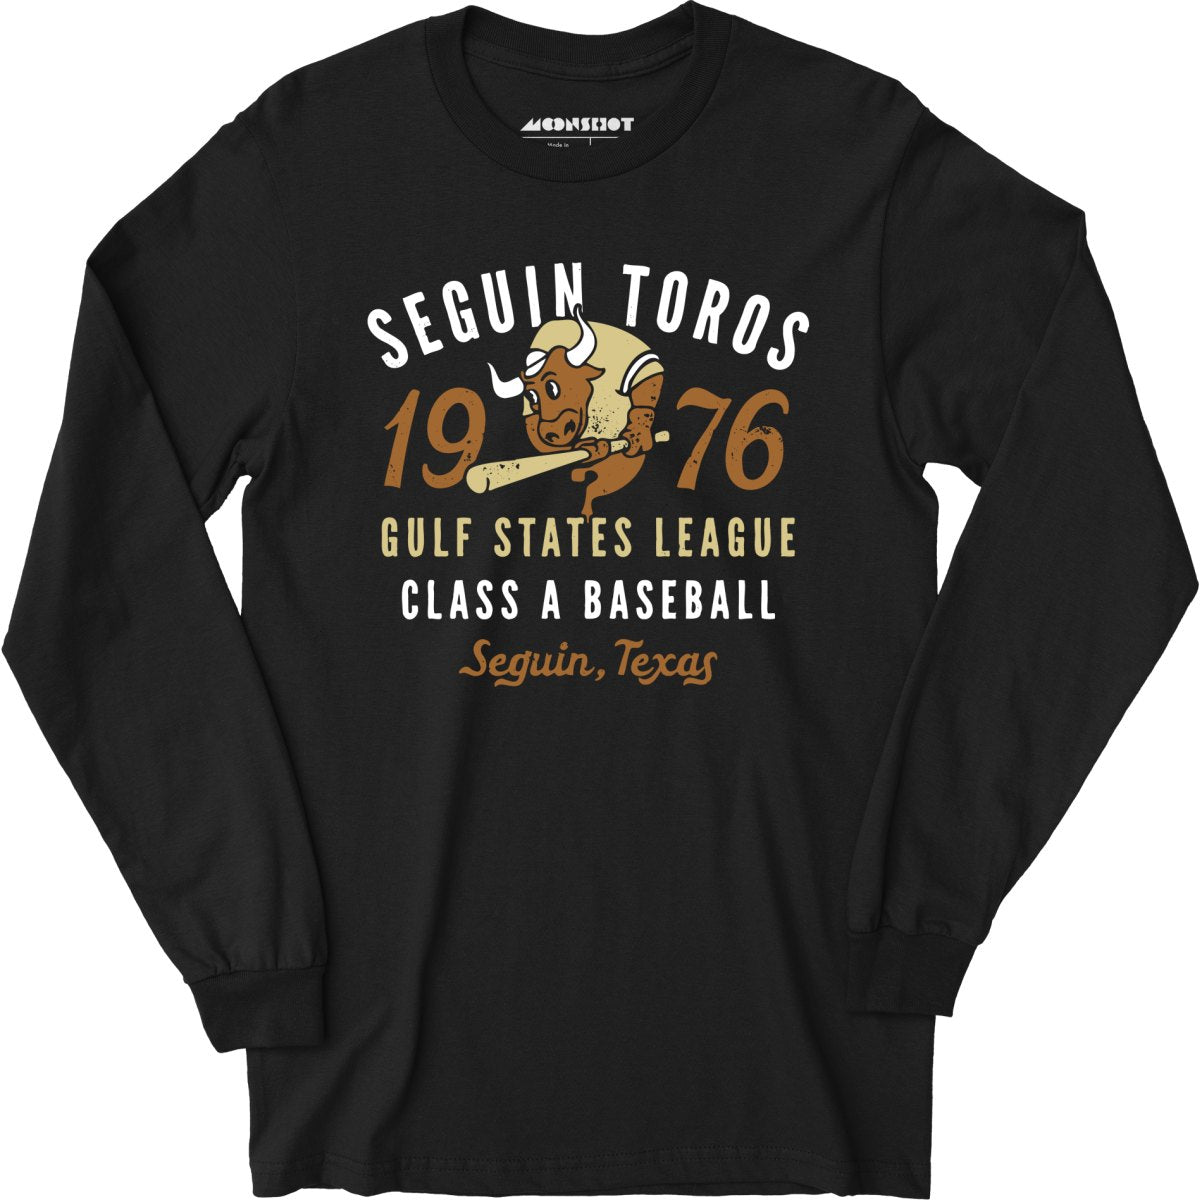 Seguin Toros - Texas - Vintage Defunct Baseball Teams - Long Sleeve T-Shirt